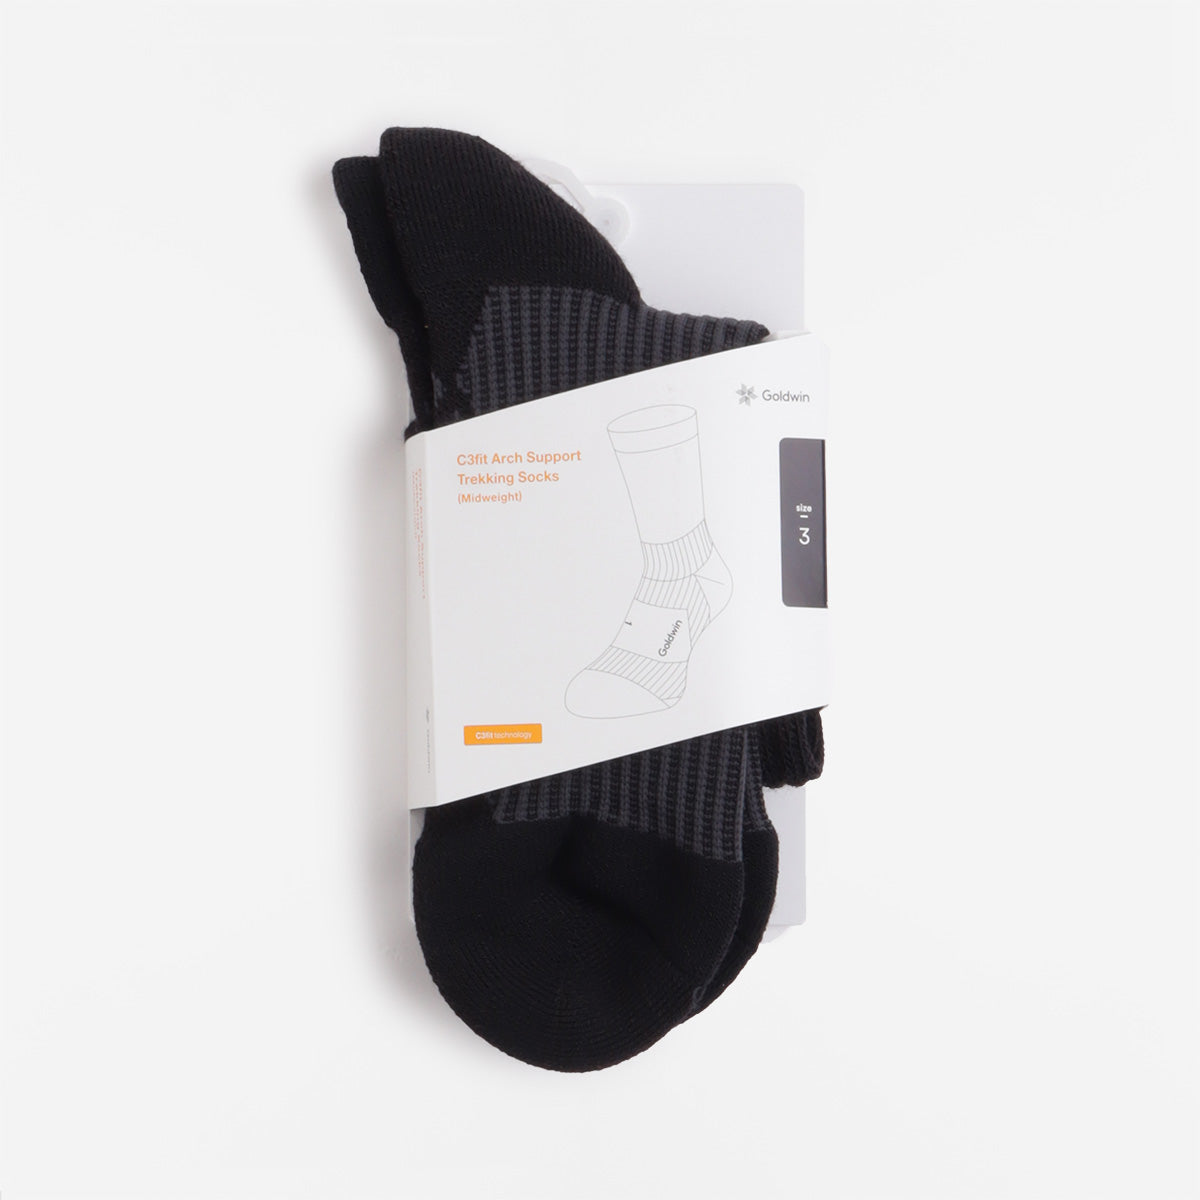 Goldwin C3Fit Arch Support Midweight Trekking Socks